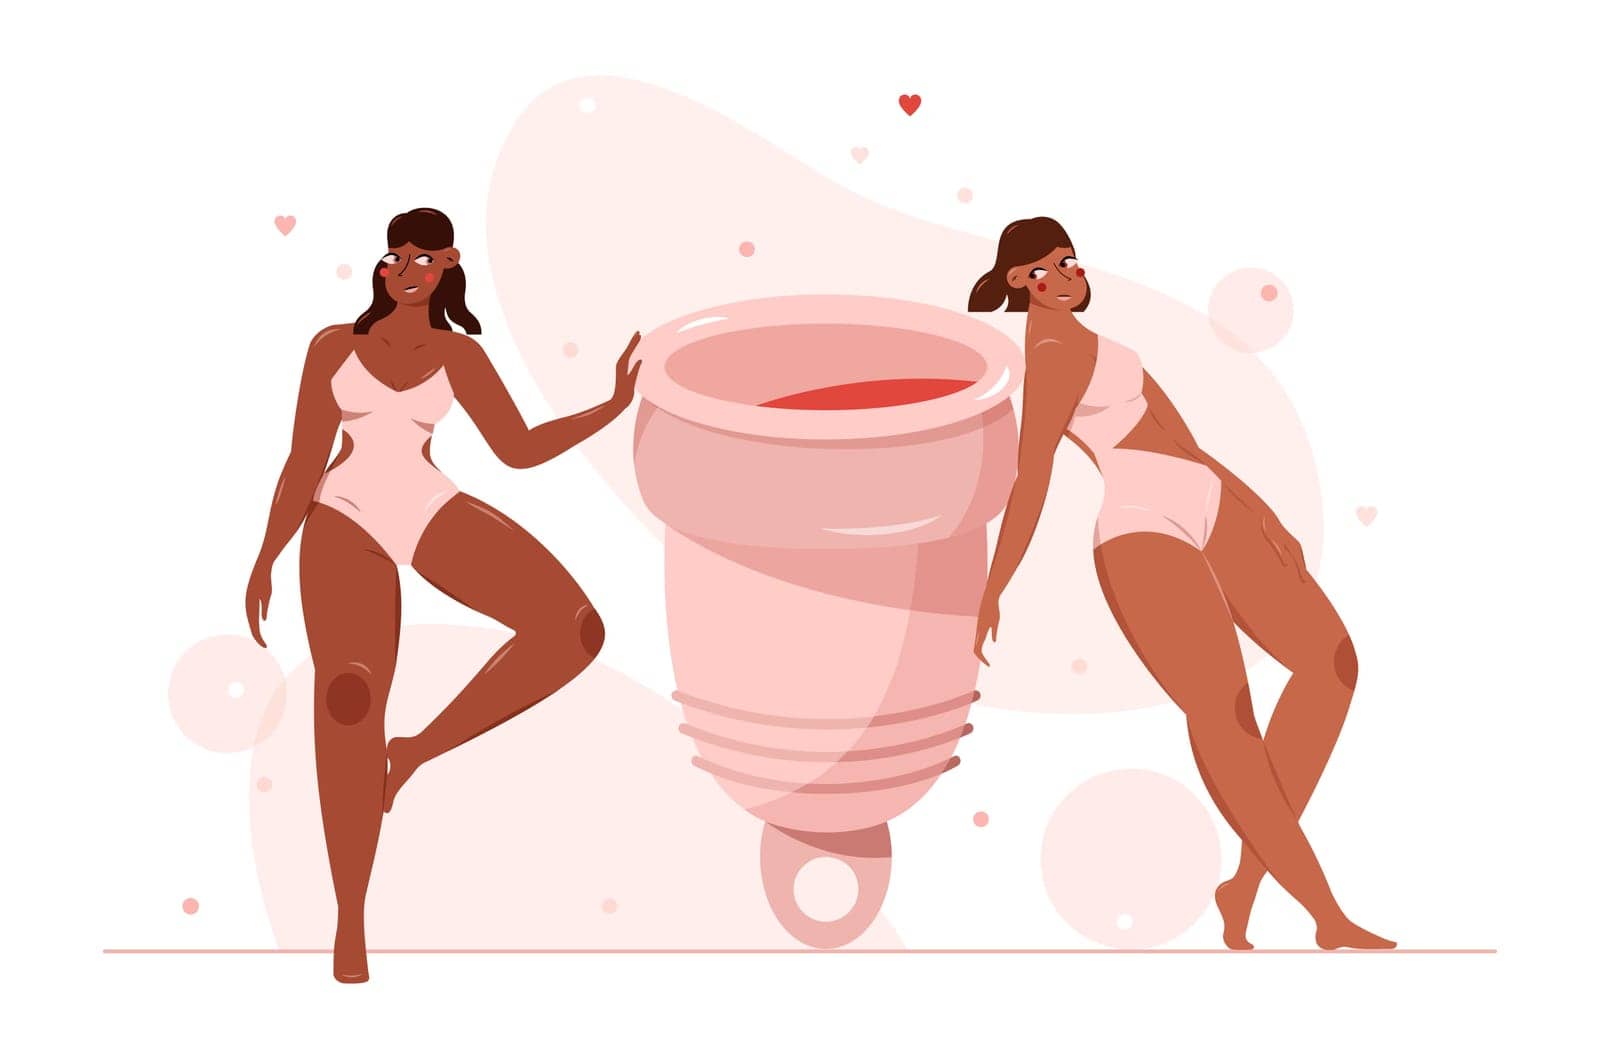 Set with Menstruation Accessories by AlexAbramova